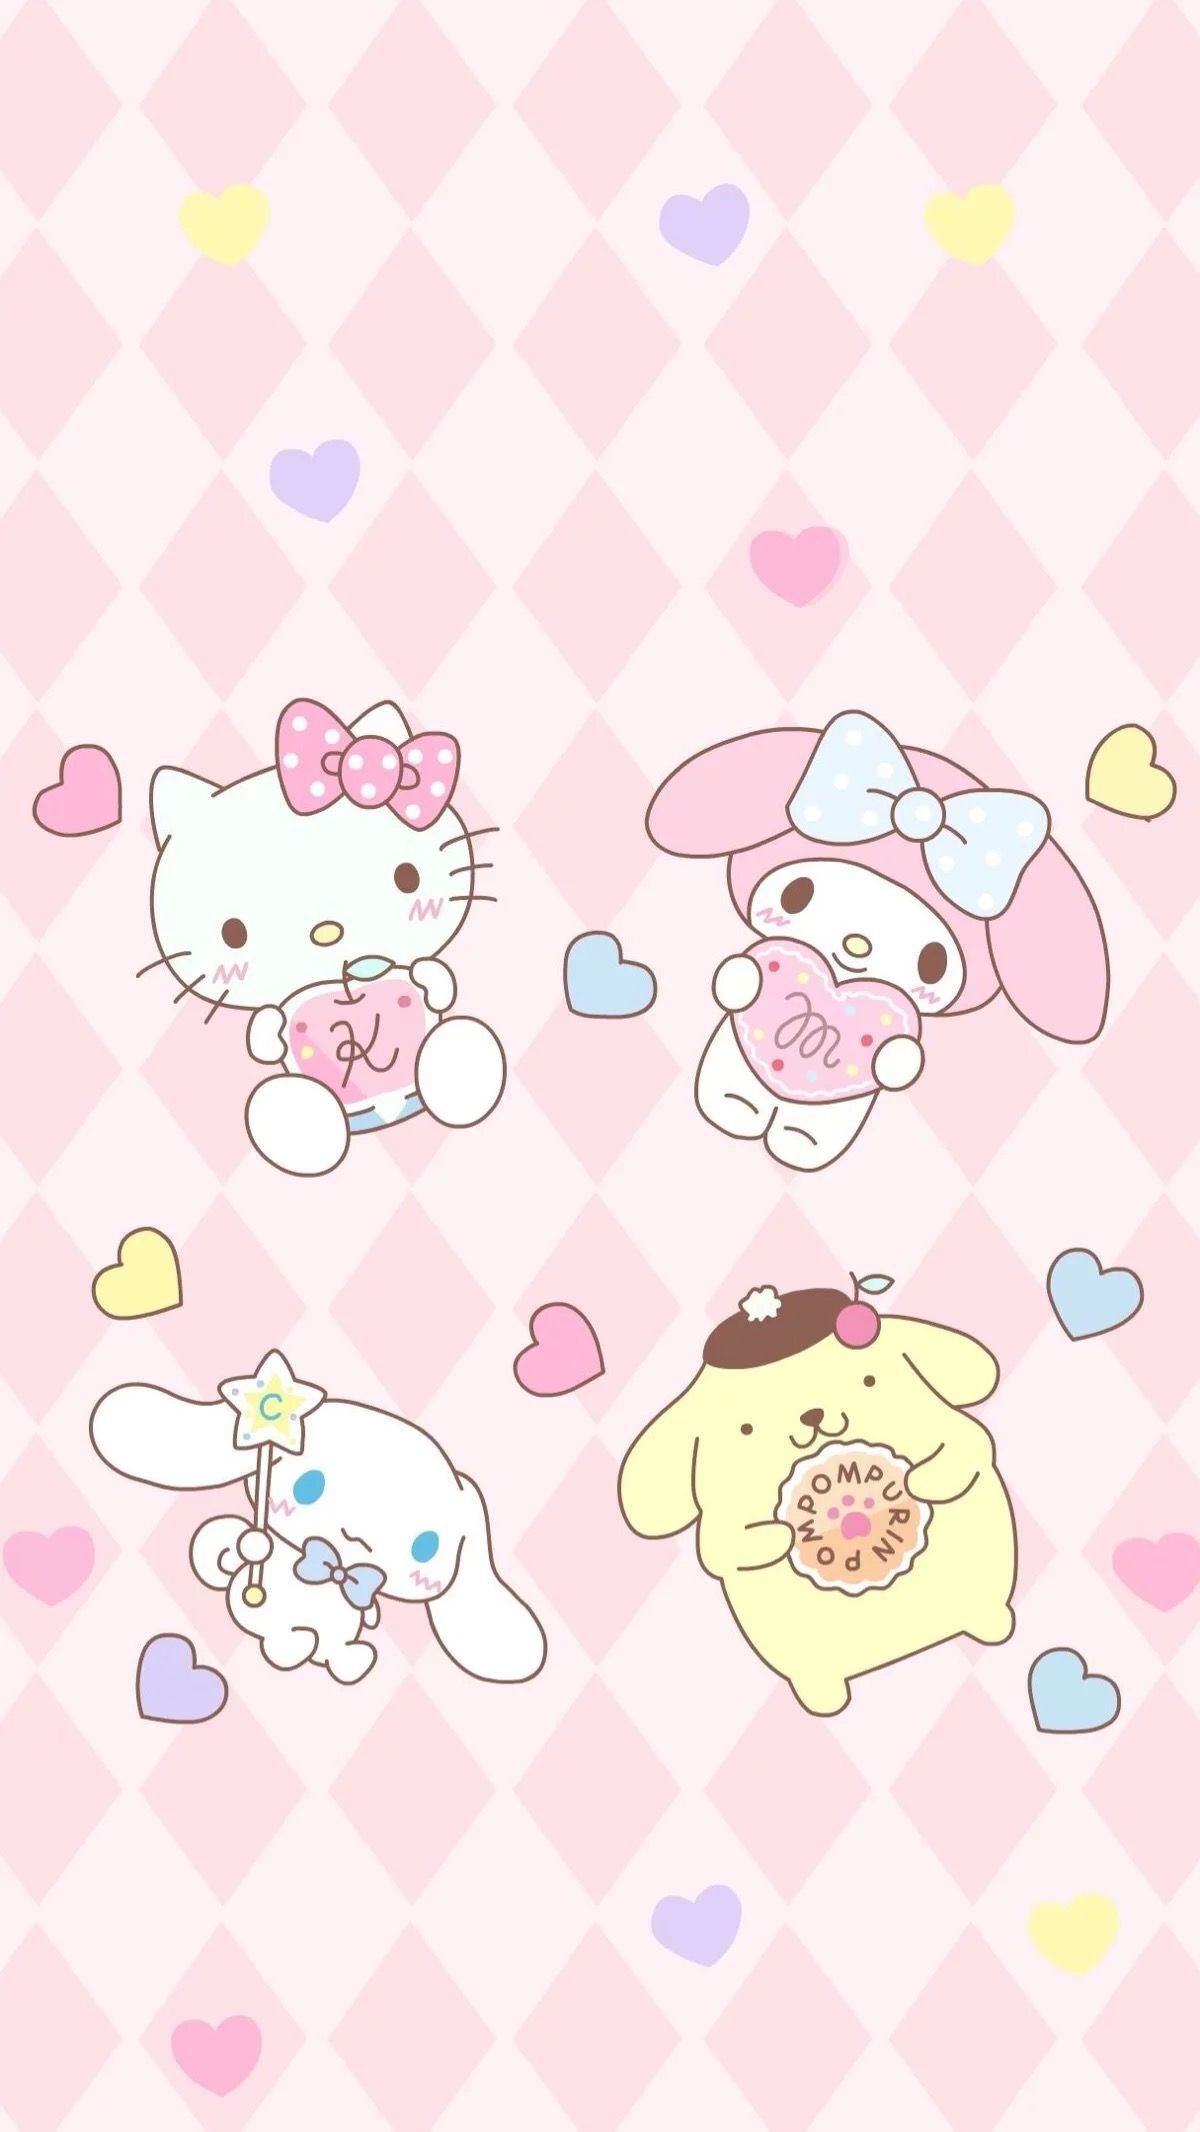 Sanrio Characters Wallpaper